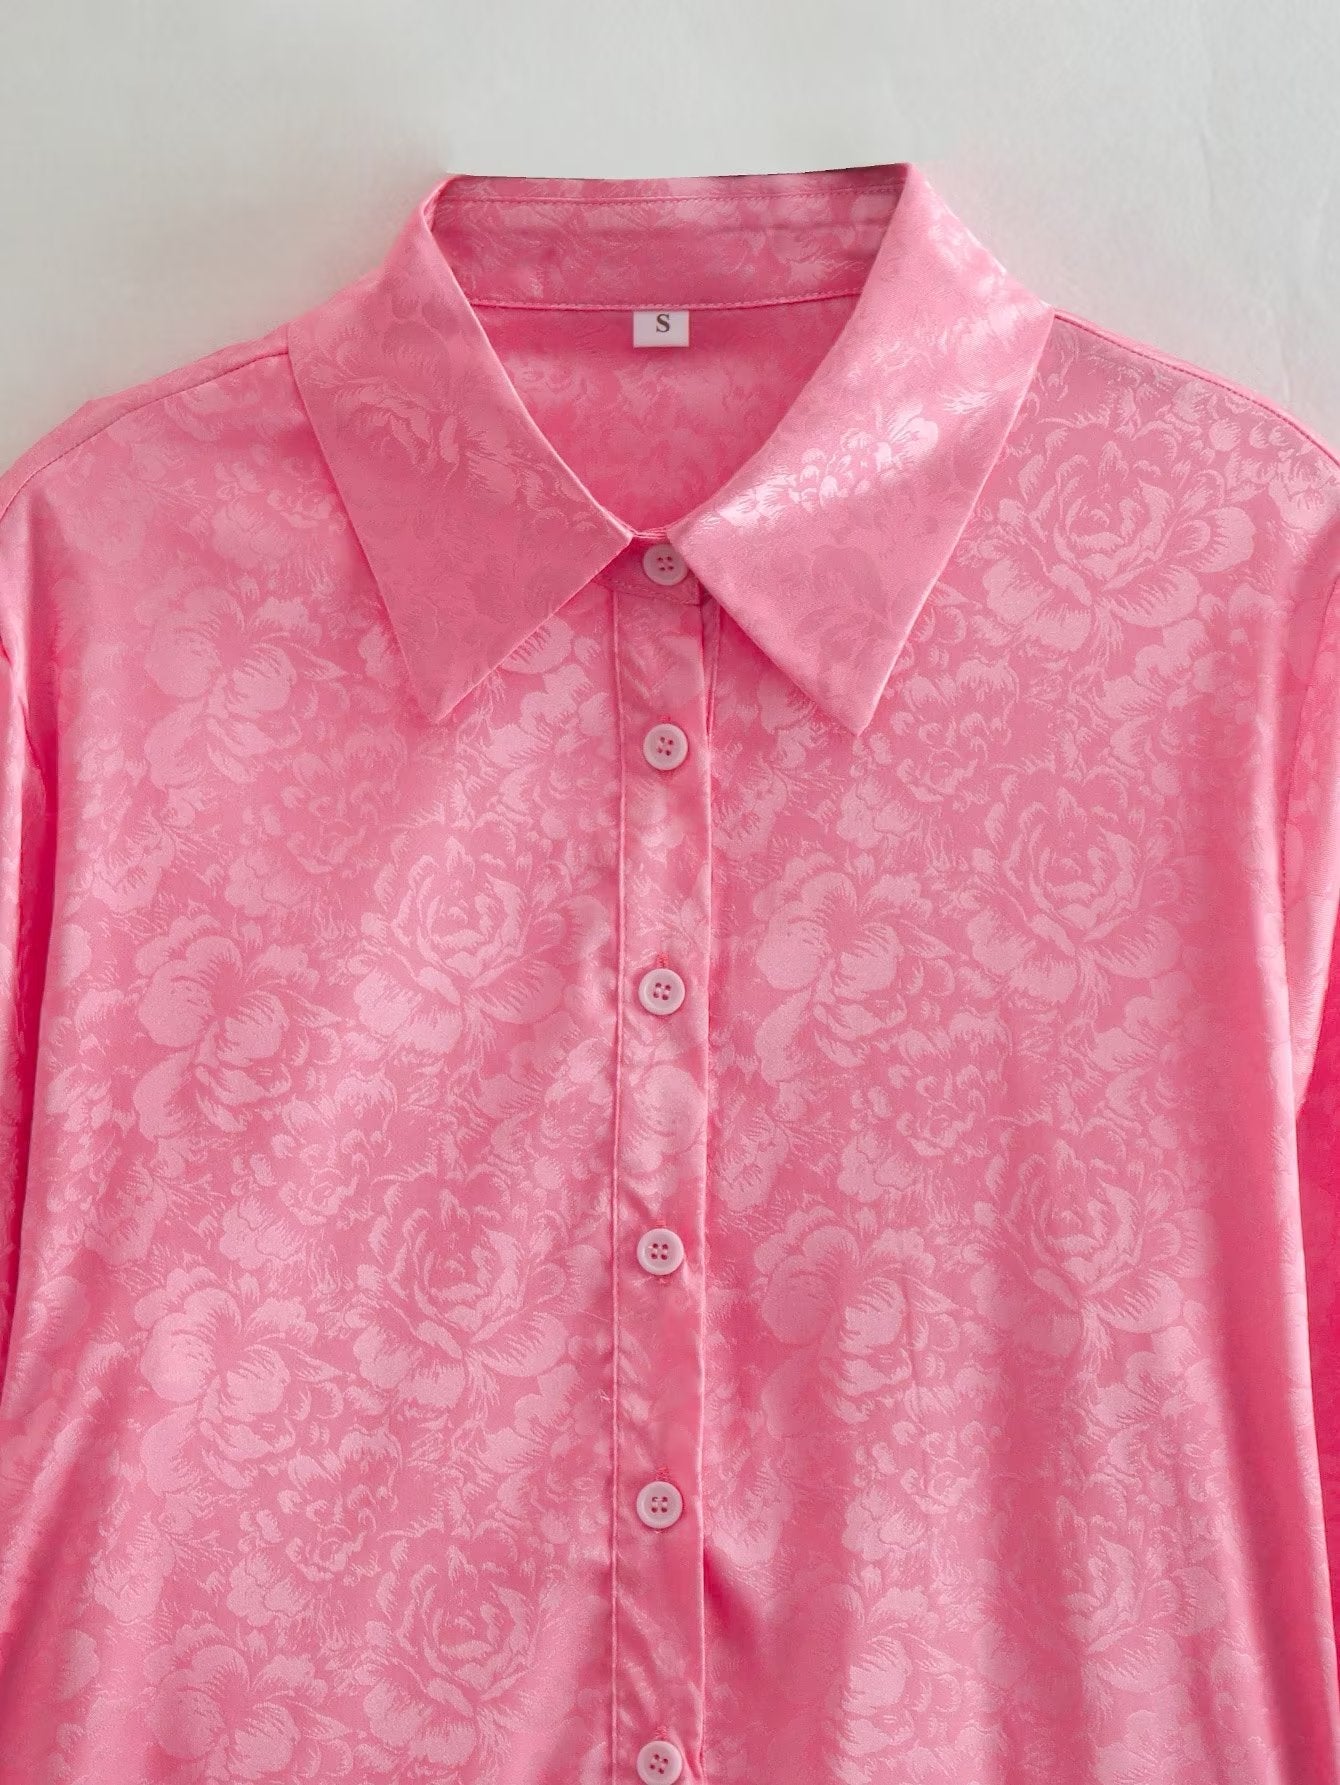 Autumn Women  Clothing Surface Jacquard Waist Lace up Office Shirt